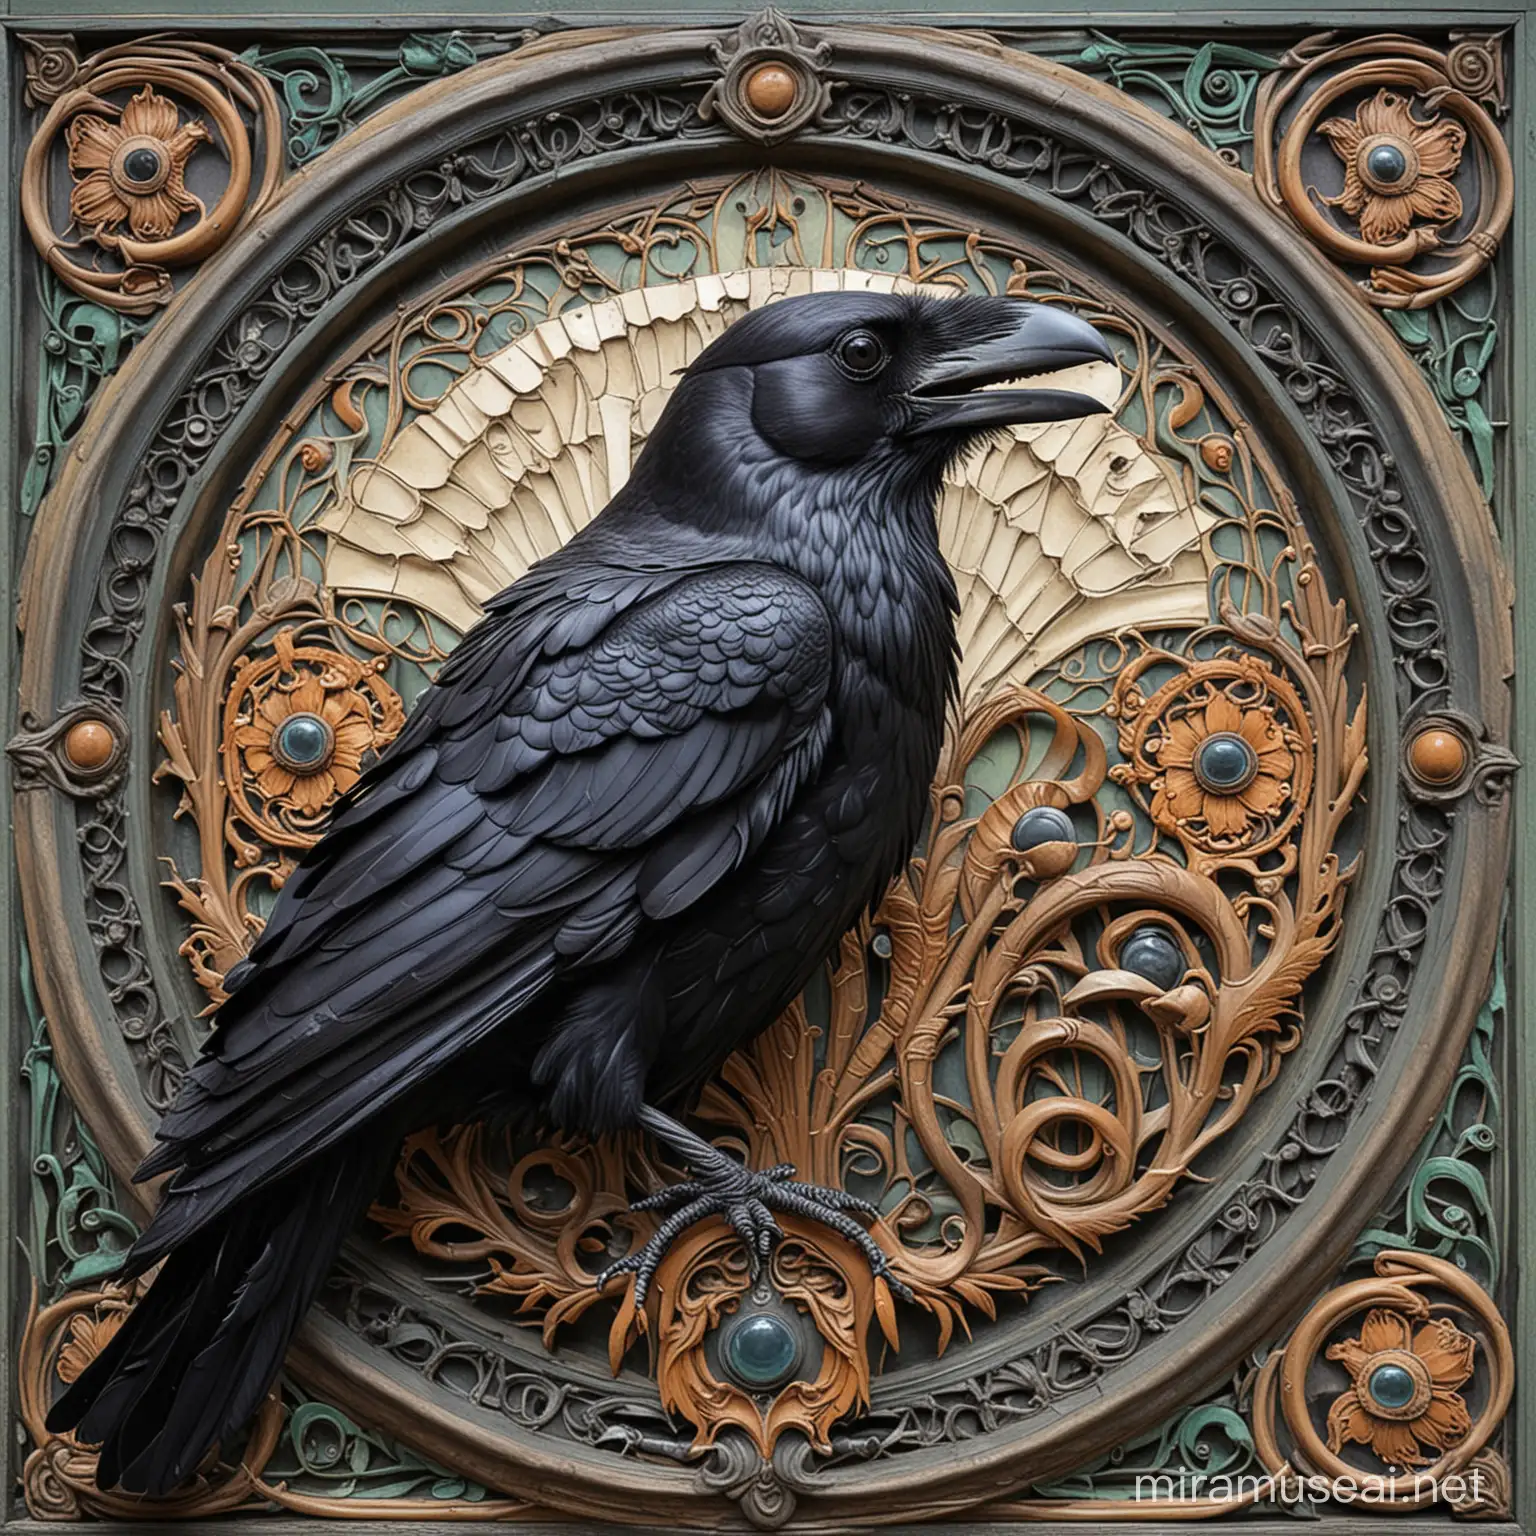 art nouveau style, raven with human teeth in beak 